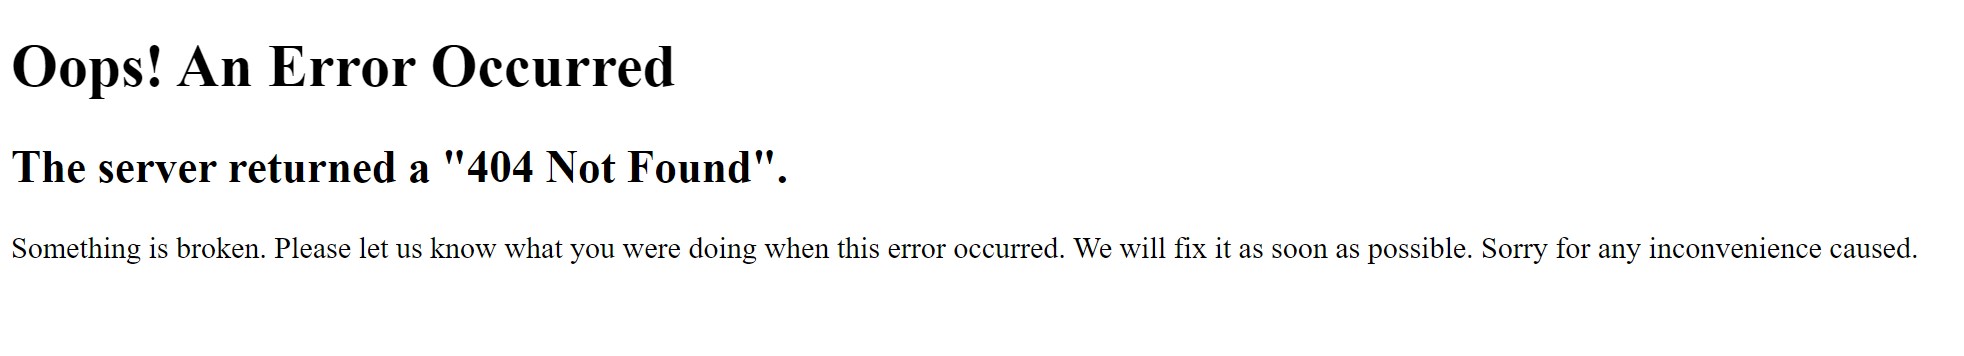 Internal Server Error. Oops, an Error occurred.. Ошибка сервера иллюстрация. Oops! Server Error occured. An internal error occurred please